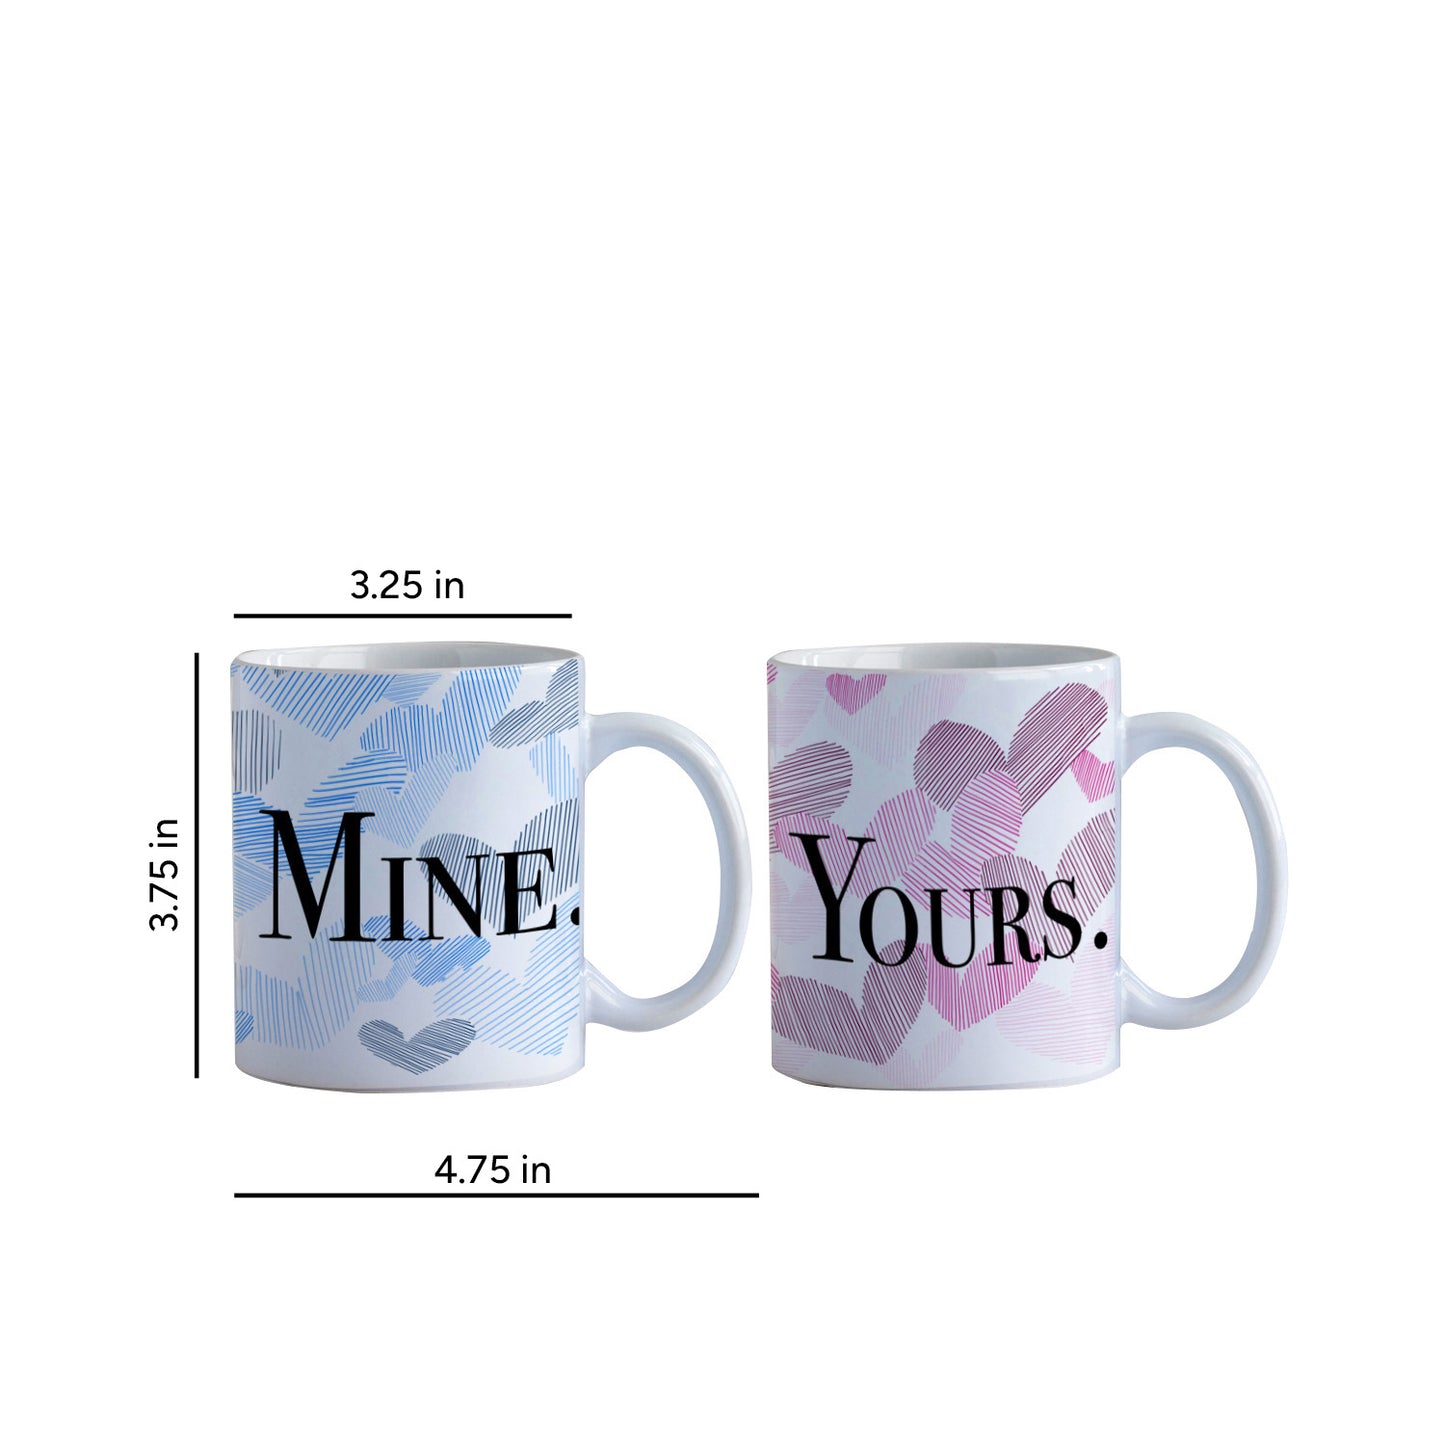 Mine Yours Mug Set of 2